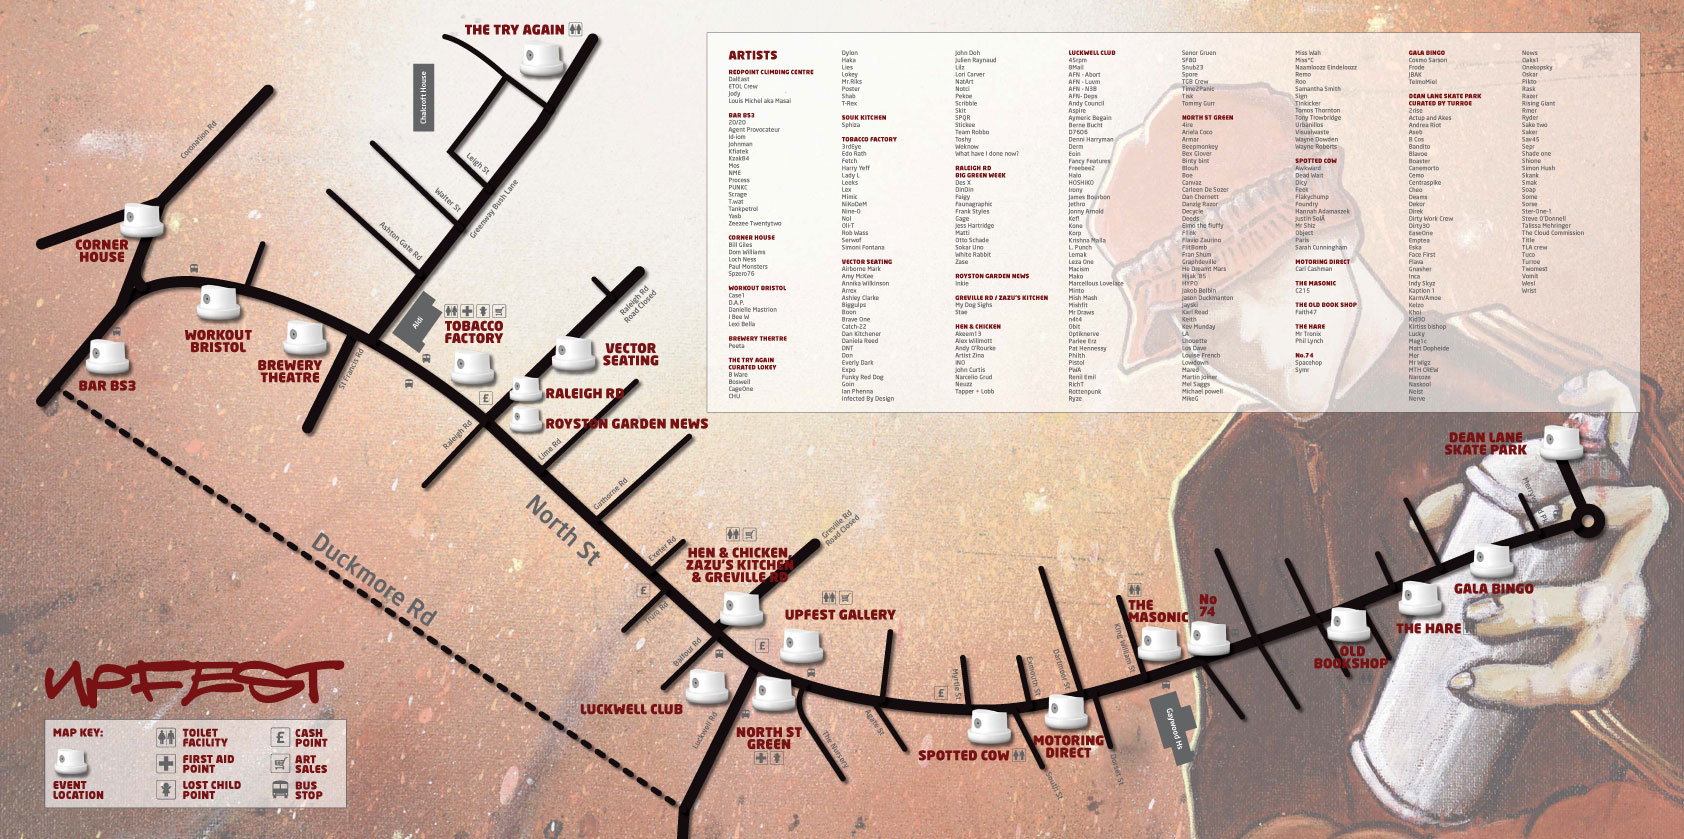 UPFEST 2013 - The Urban Paint Festival - mapa